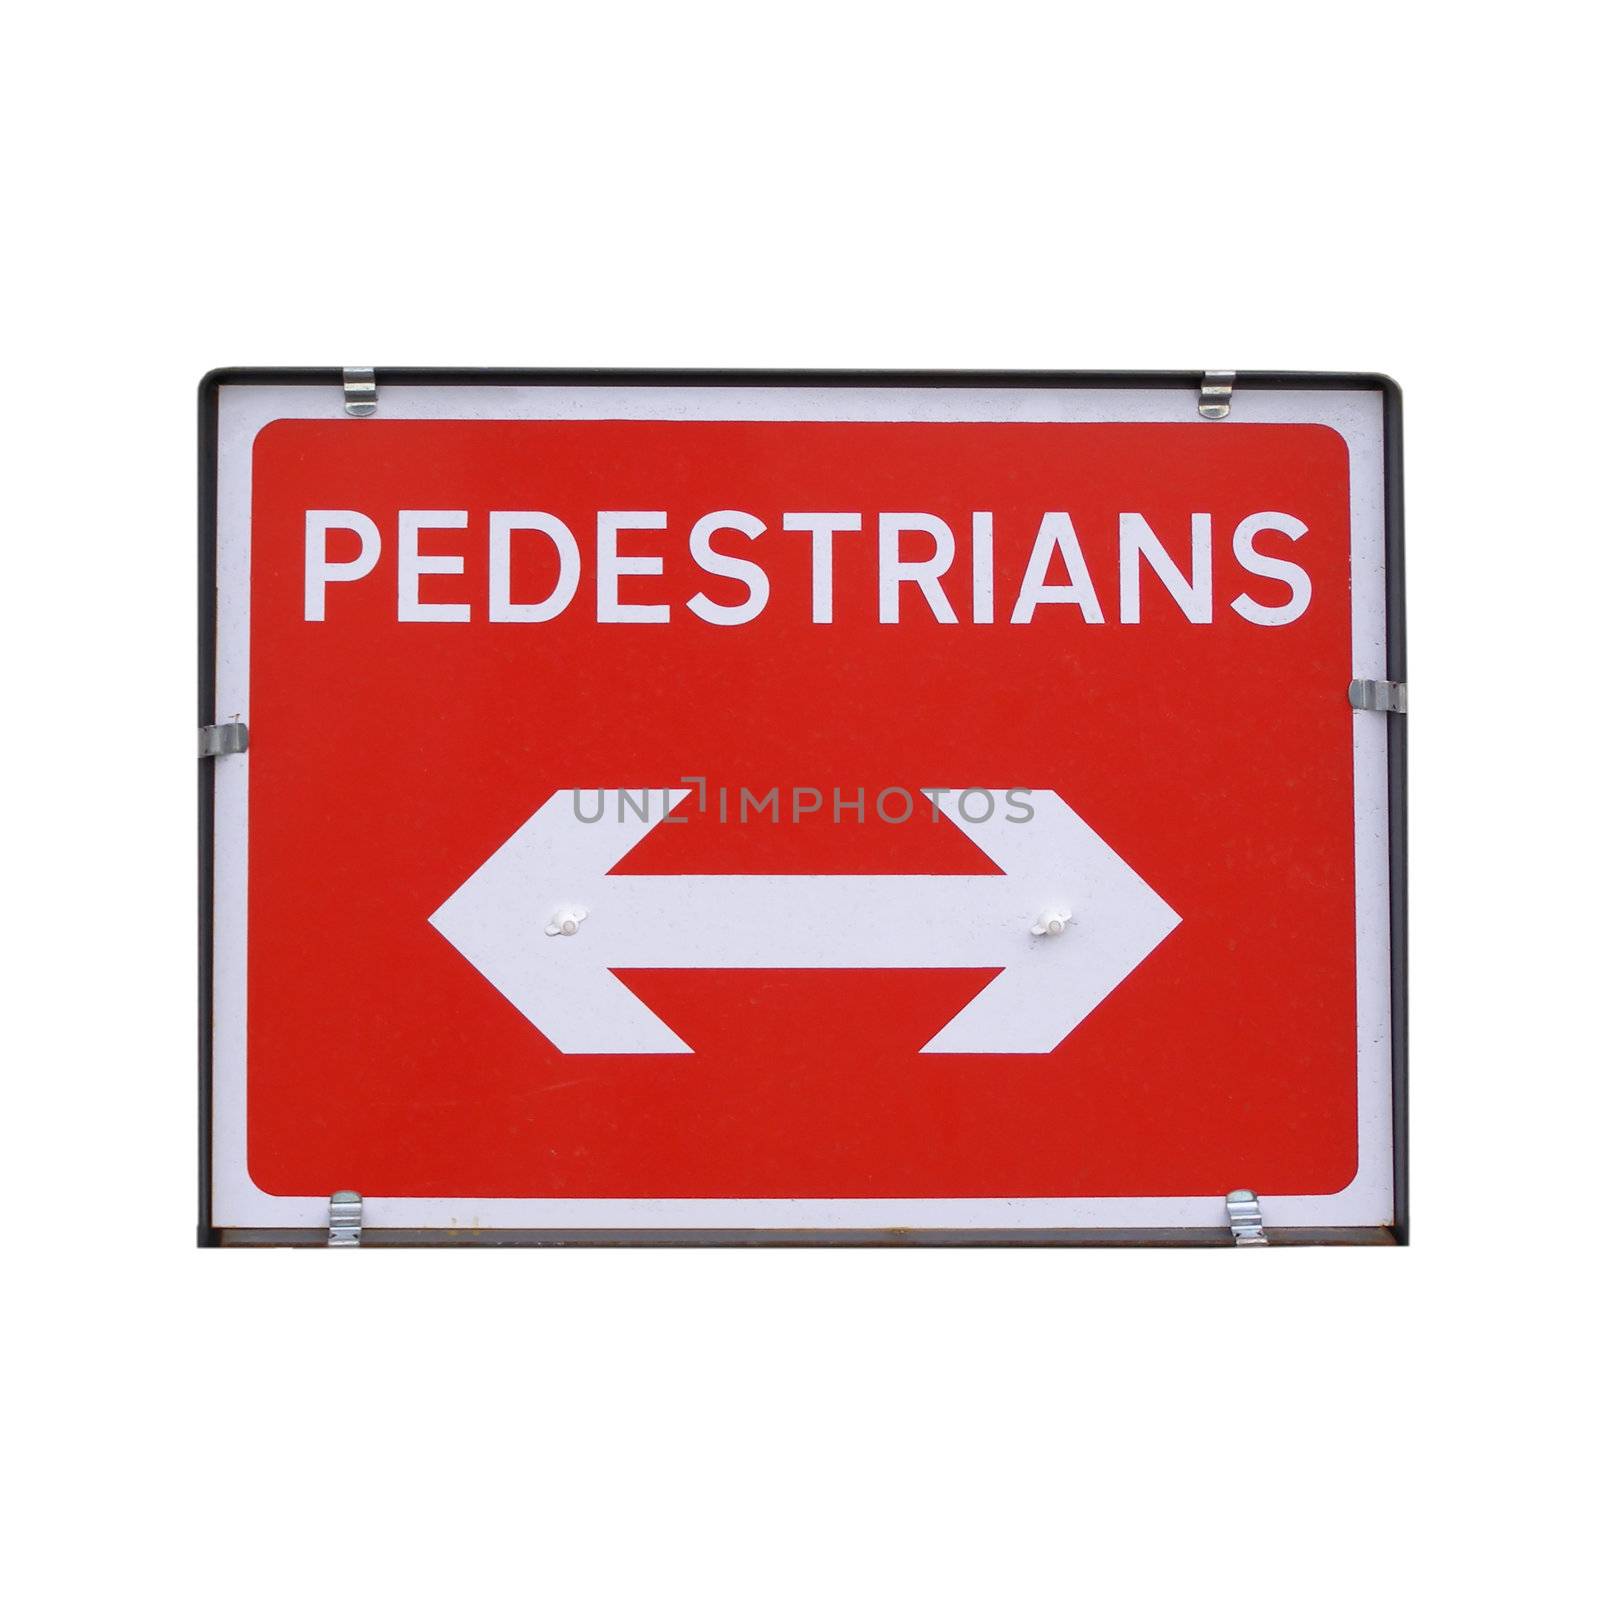 Pedestrians sign for road works